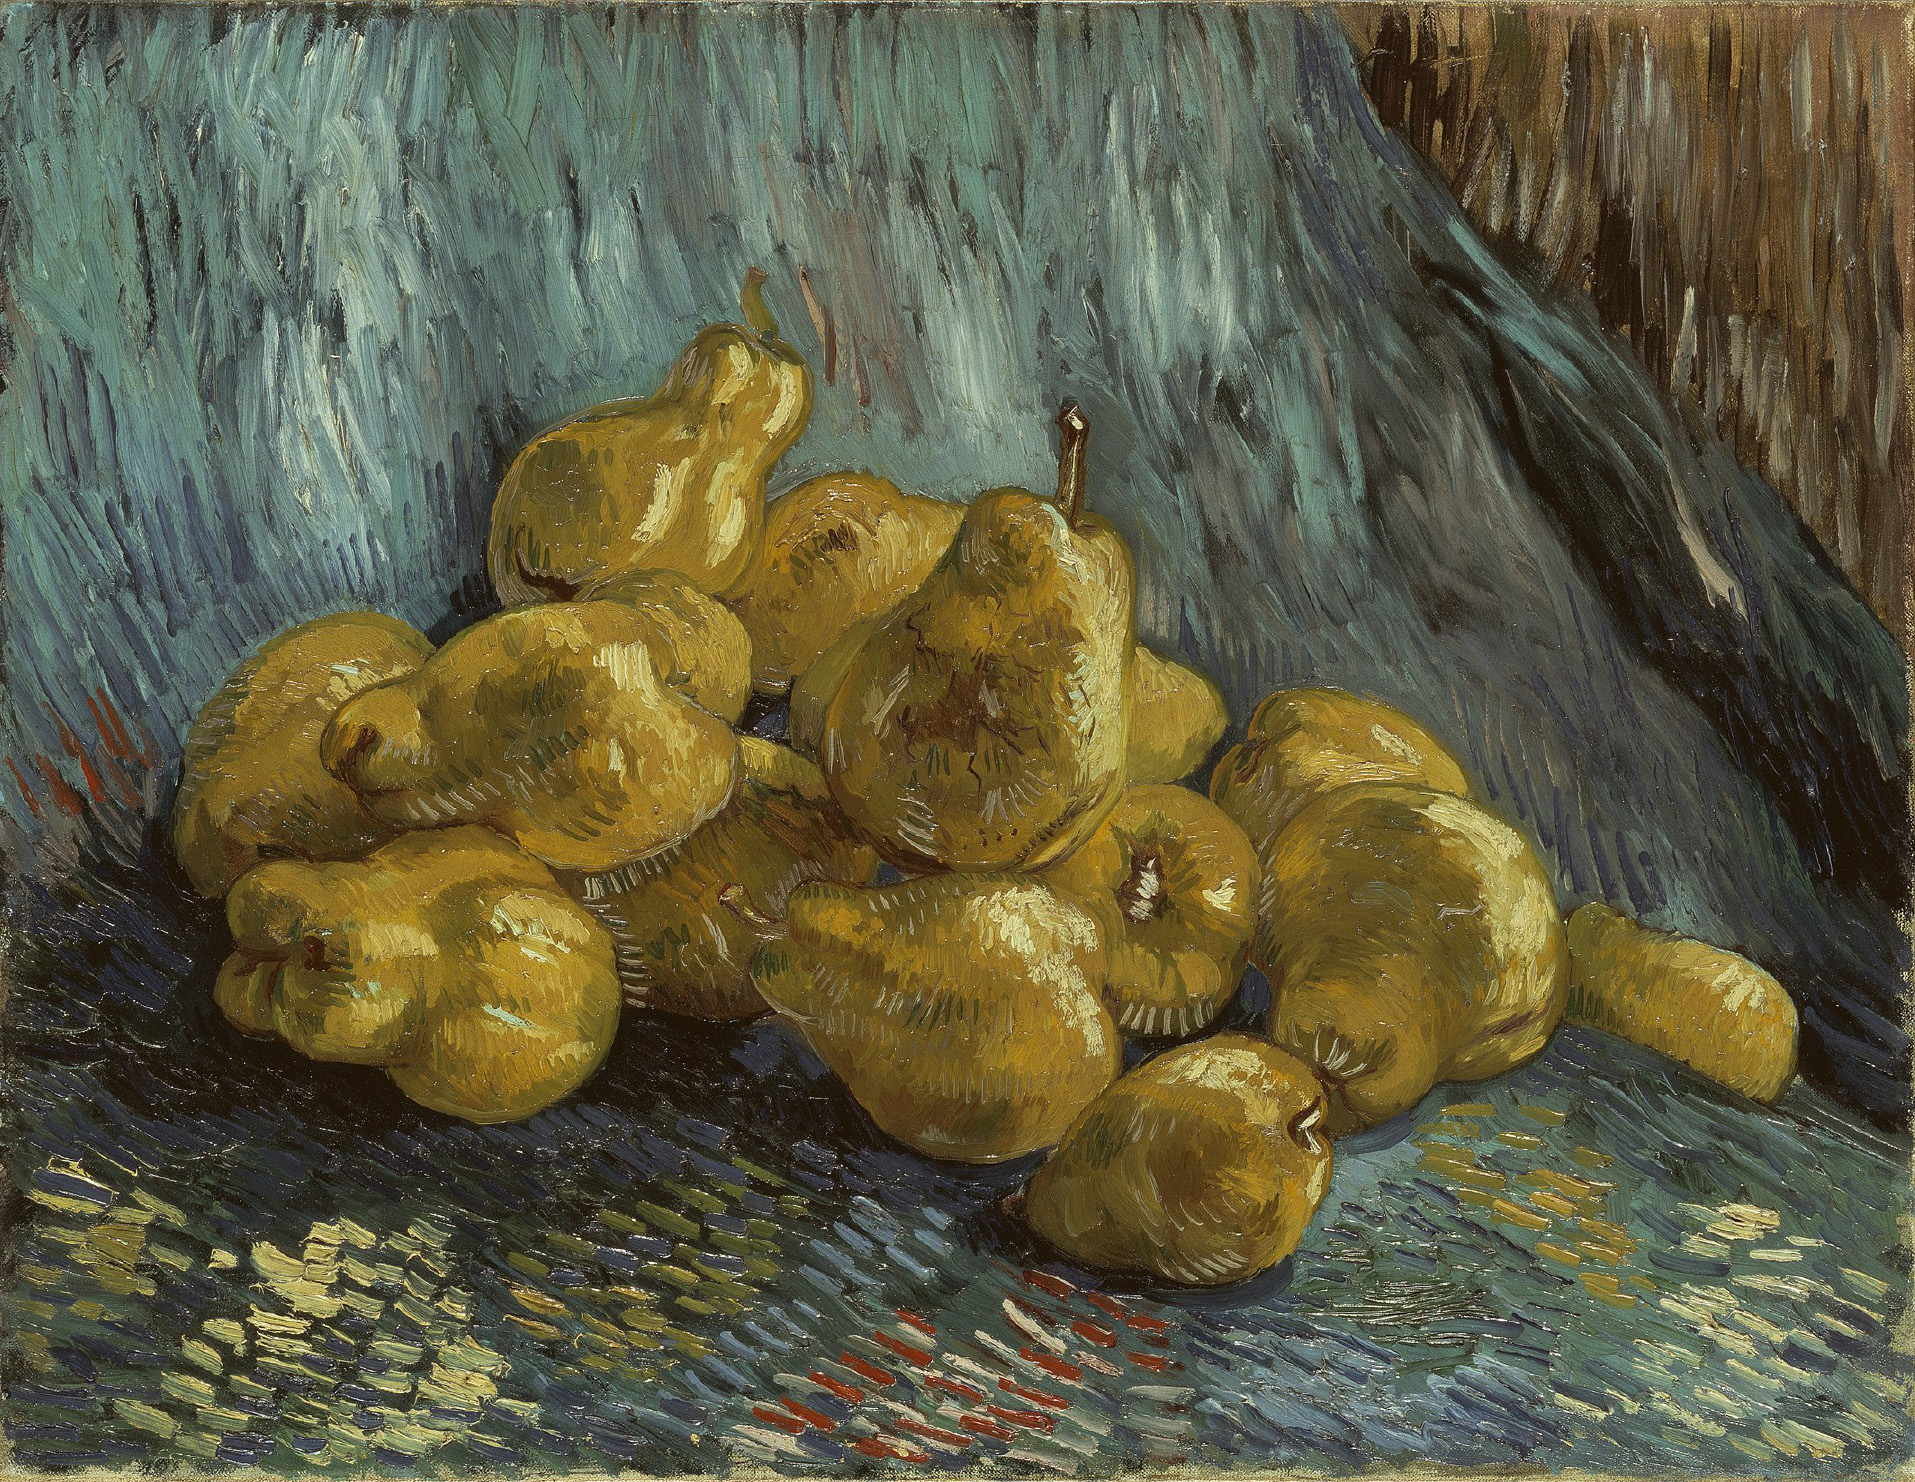 Natura morta con mele cotogne by Vincent van Gogh - 1887/88 - 46 x 59,5 cm 